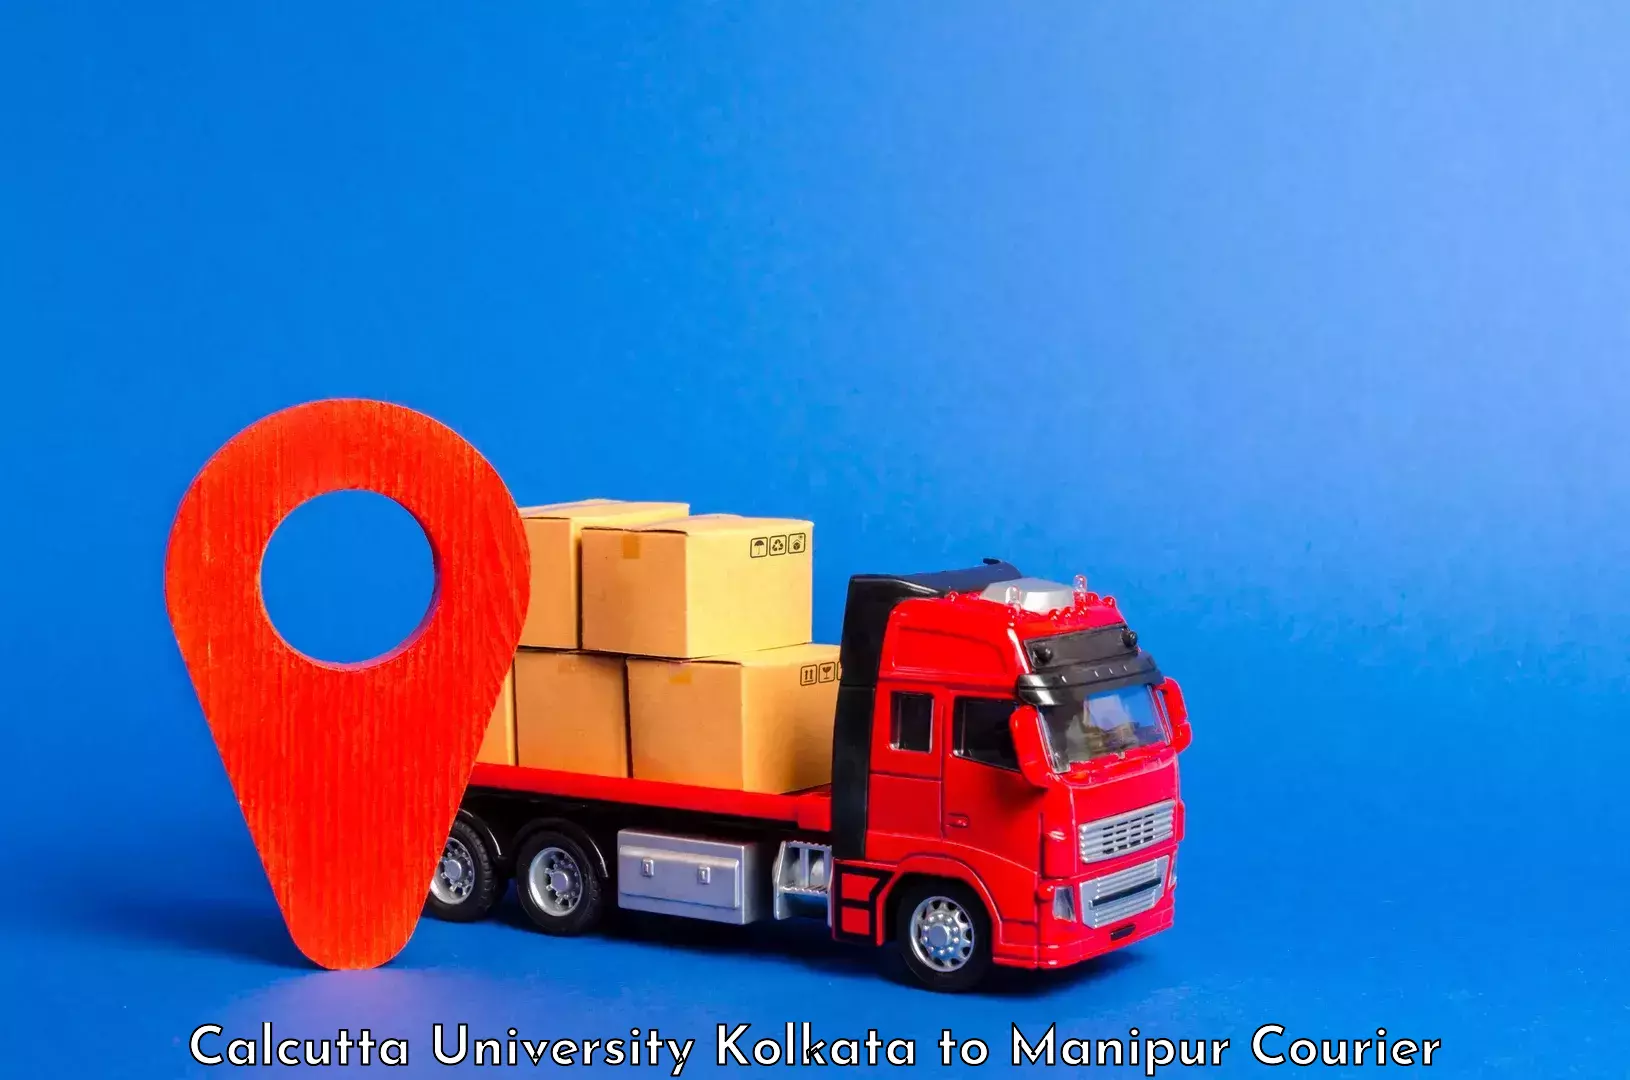 Luggage shipment specialists in Calcutta University Kolkata to Imphal